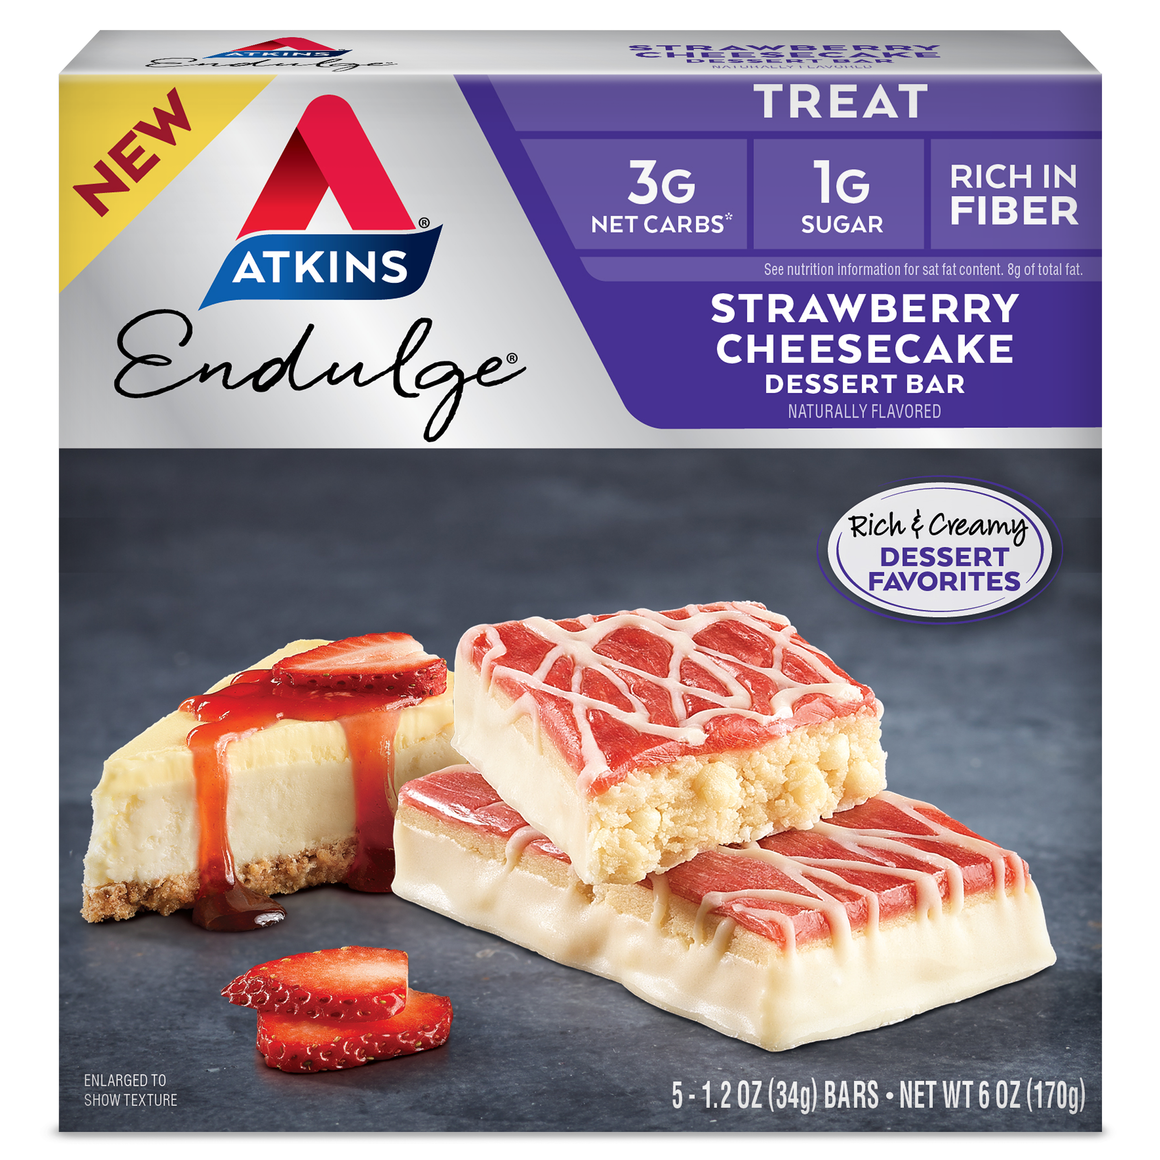 Atkins Endulge Dessert Bars - Strawberry Cheesecake - 5 Bars